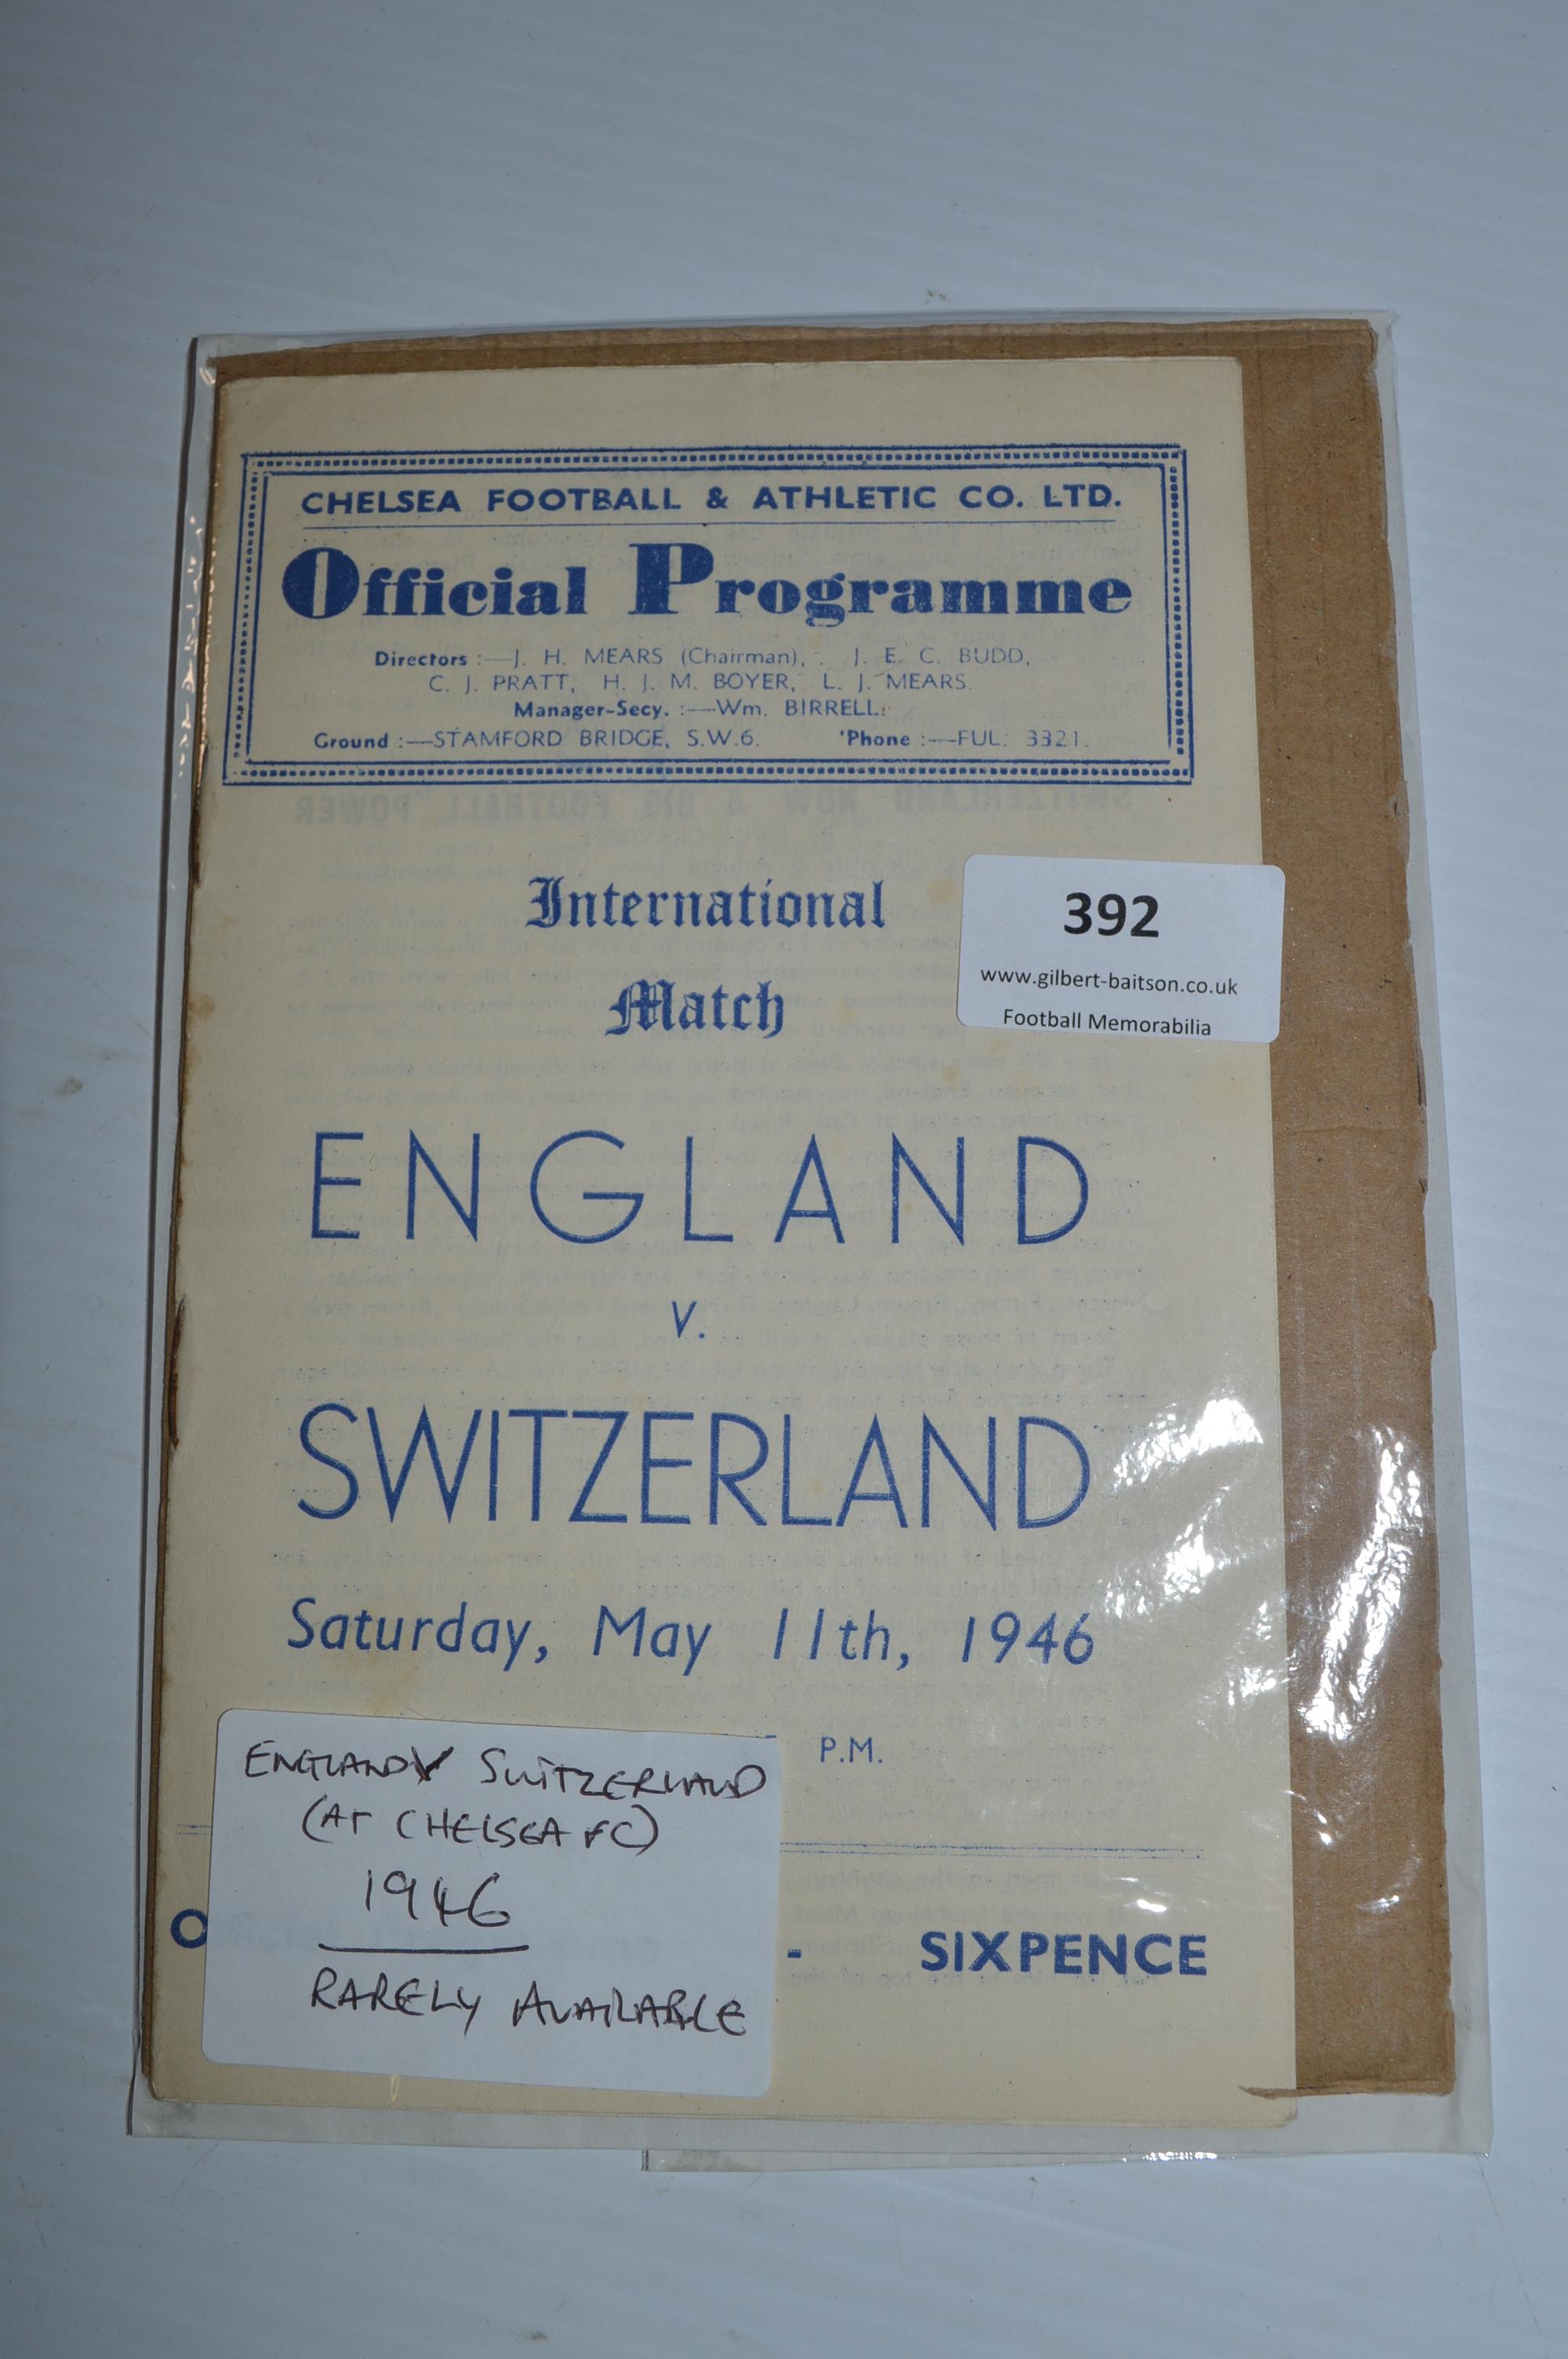 England vs Switzerland at Chelsea 1946